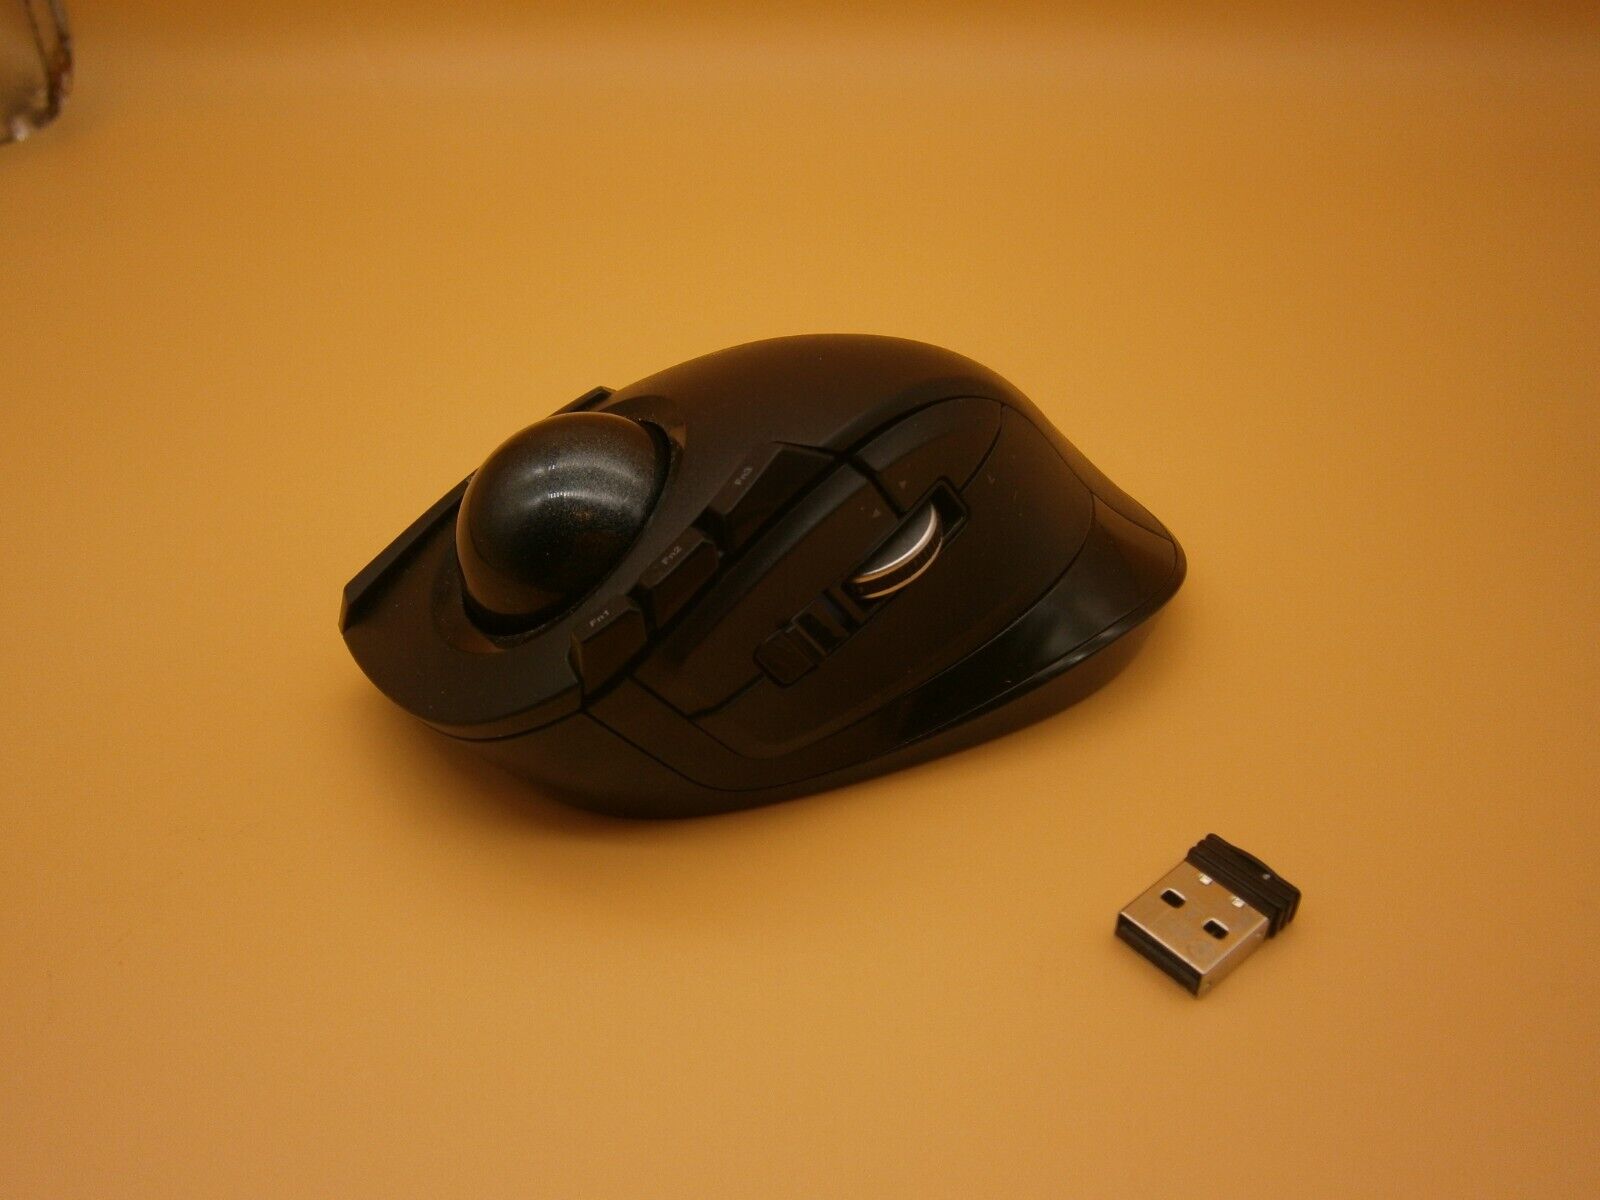 Elecom Deft Wireless Trackball Mouse (M-DT2DR) Black